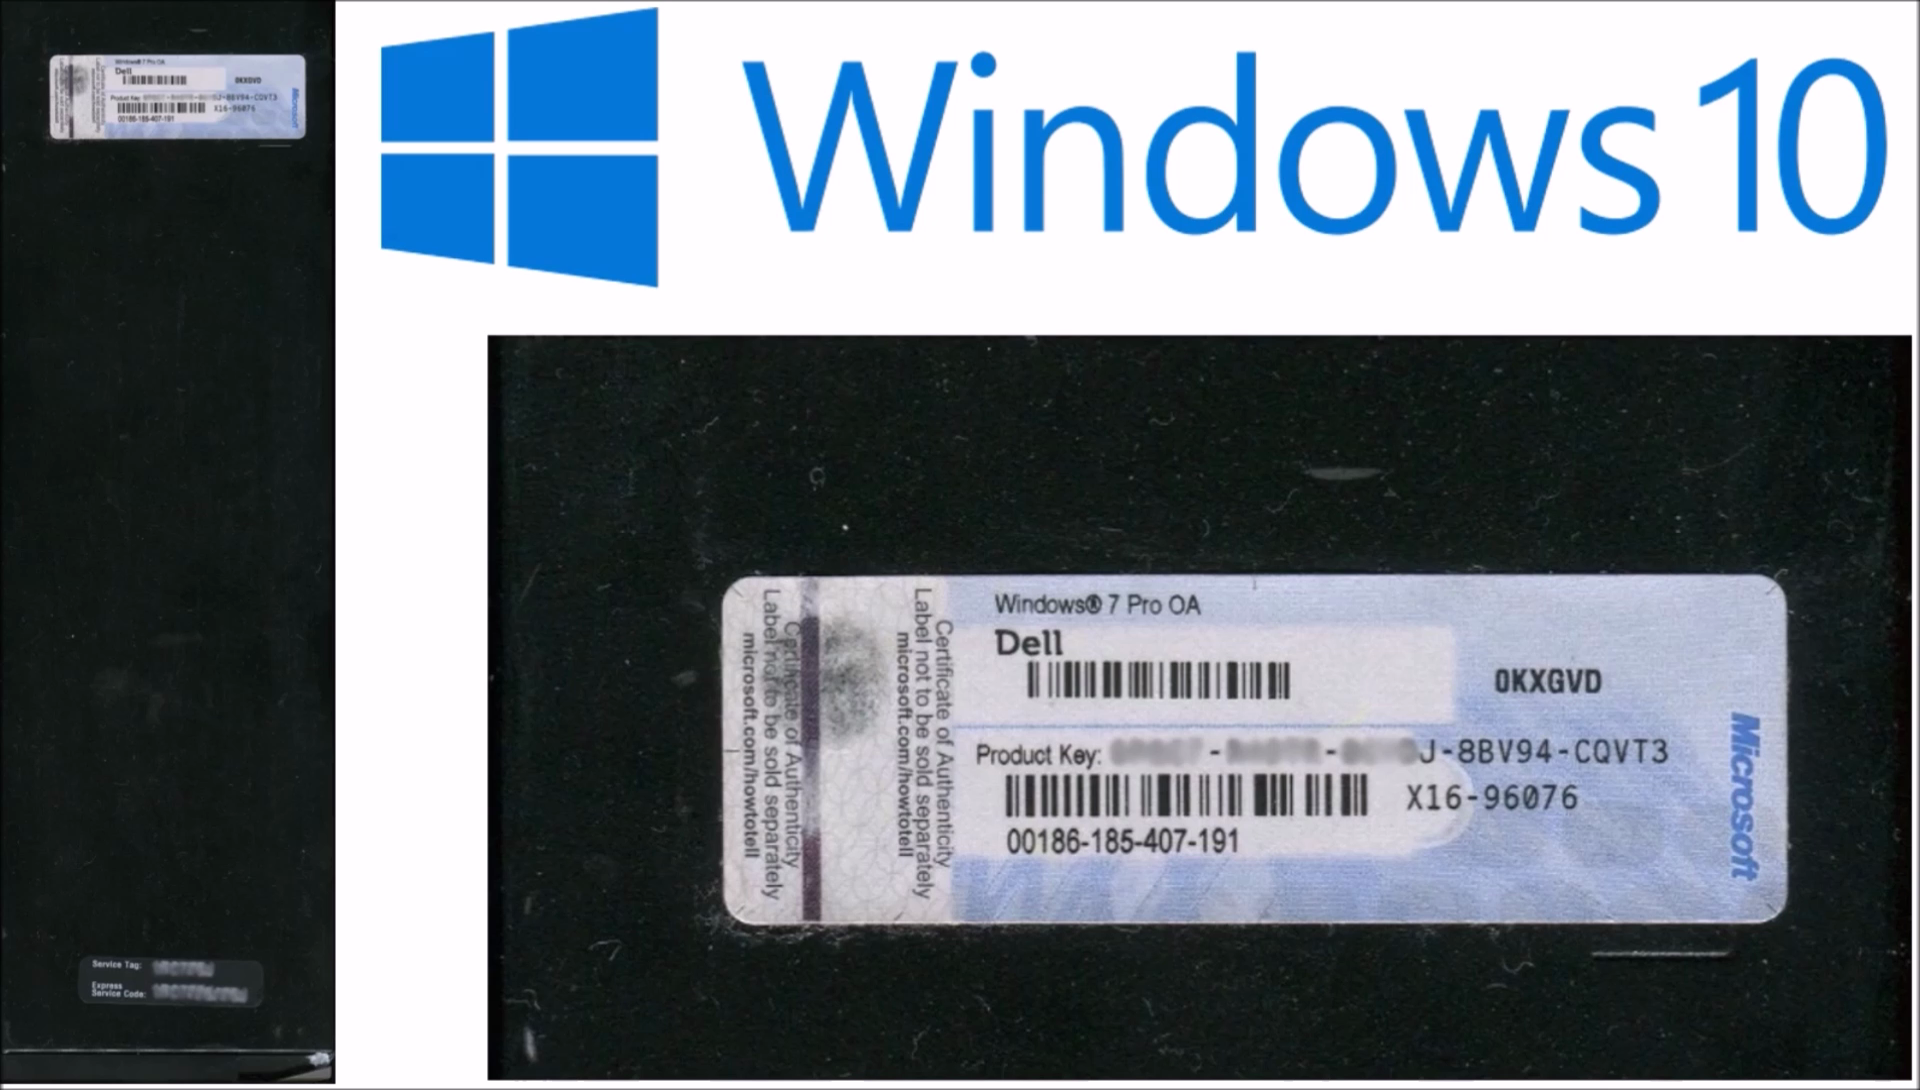 Windows 7 key for windows 10